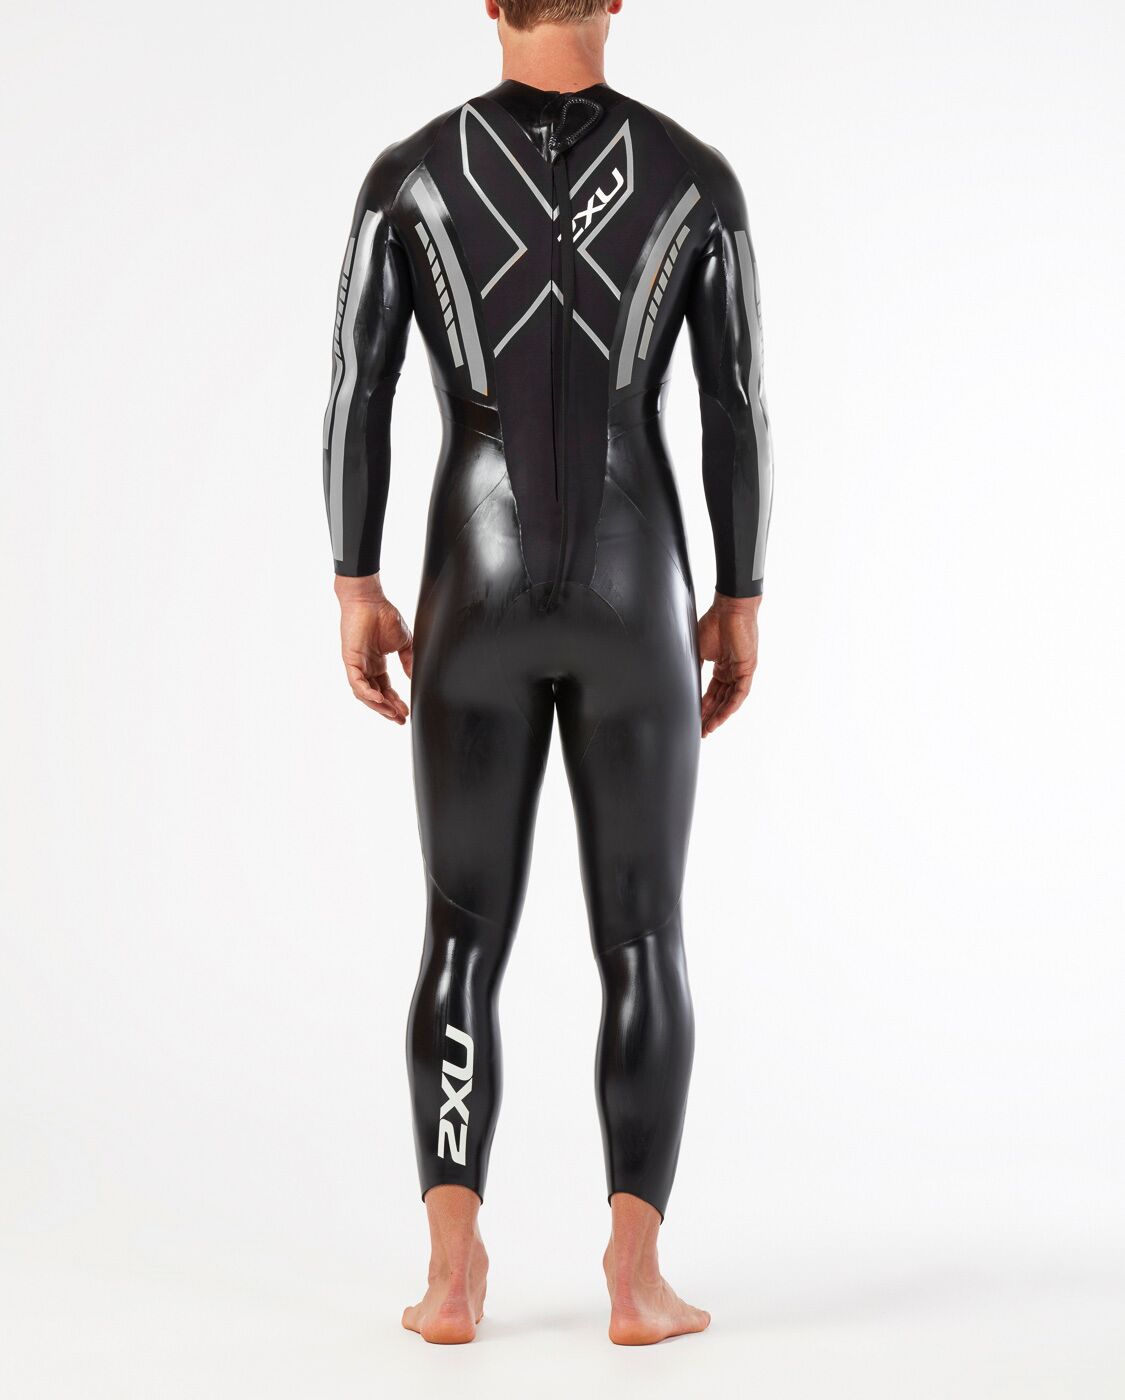 2XU South Africa - Men's Propel:1 Wetsuit - Black/Silver